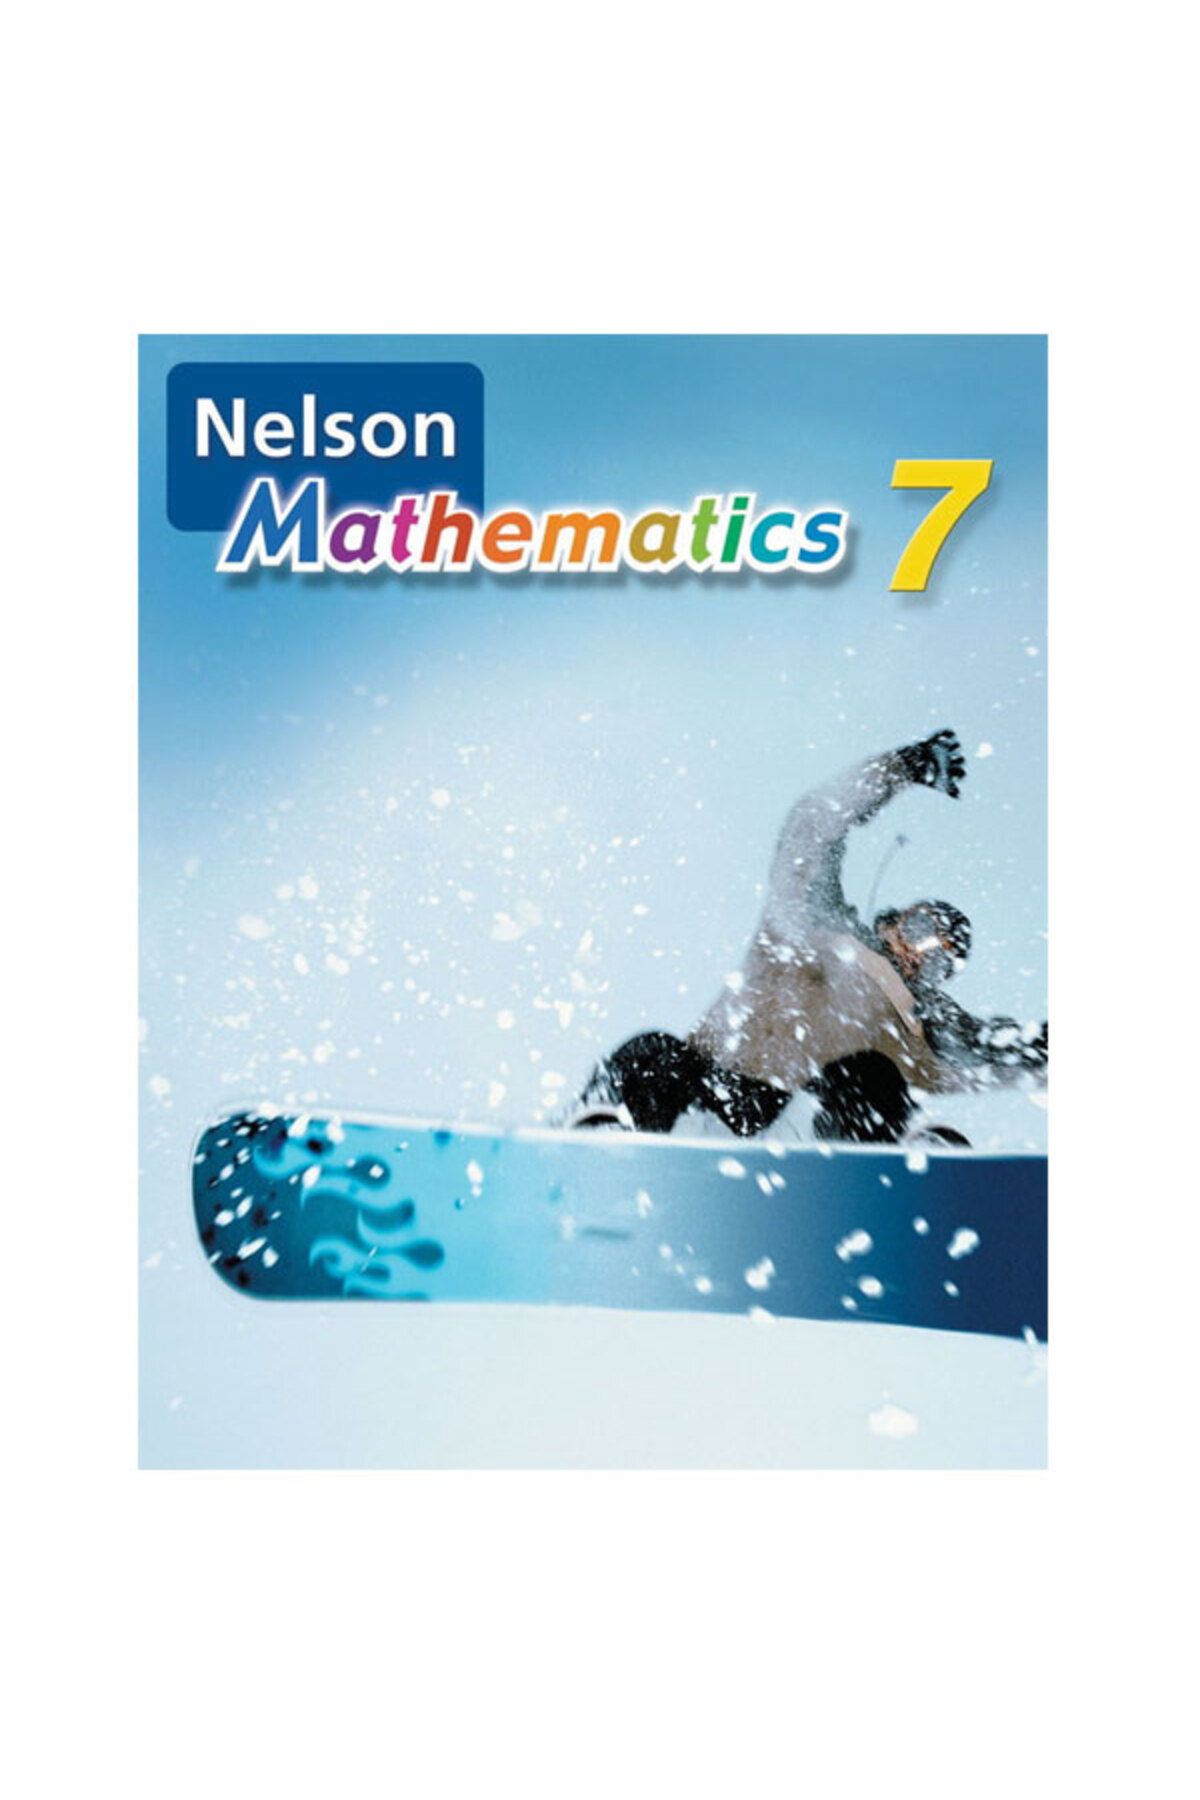 Nelson Mathematics 7 Student Book Student Online Text Pdfs